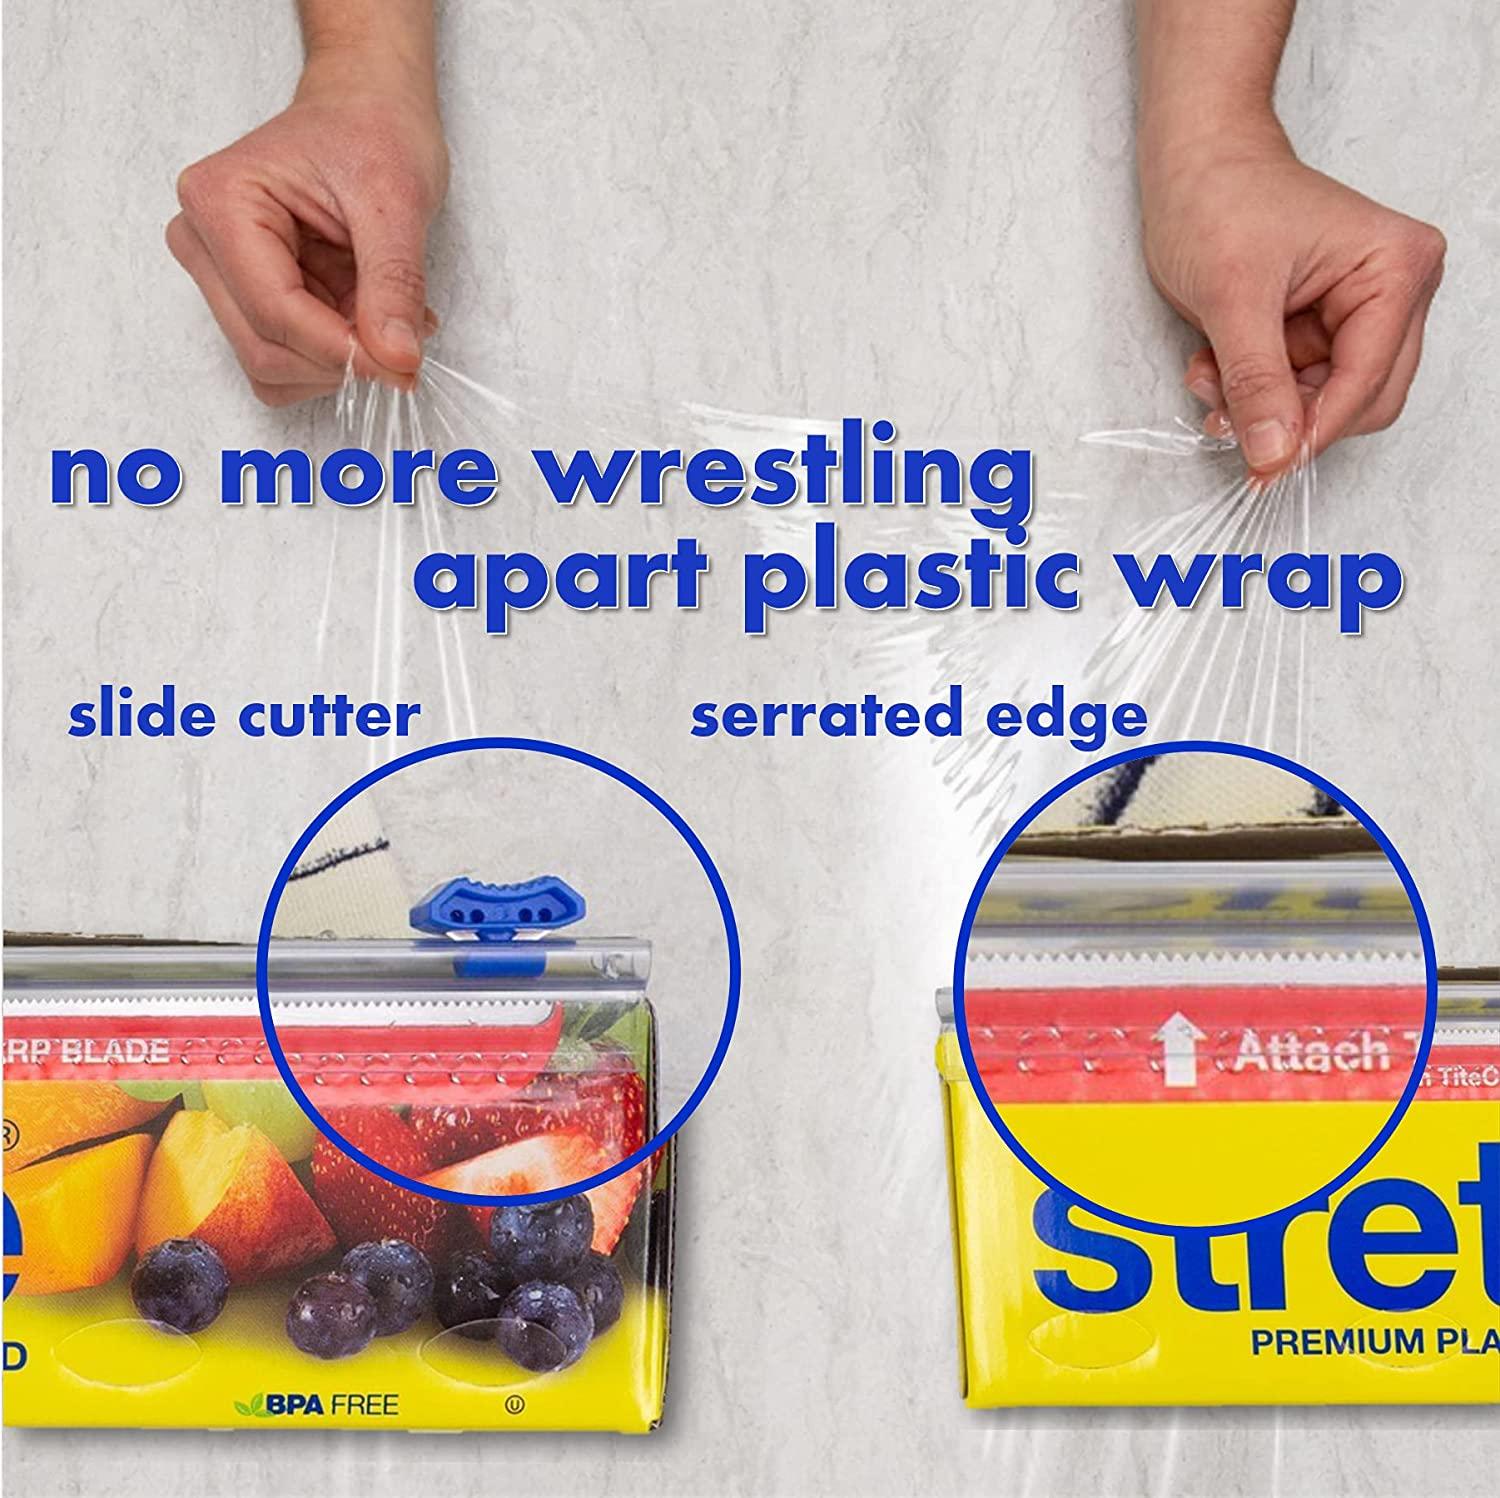 Stretch-Tite Plastic Food Wrap, 250 ft